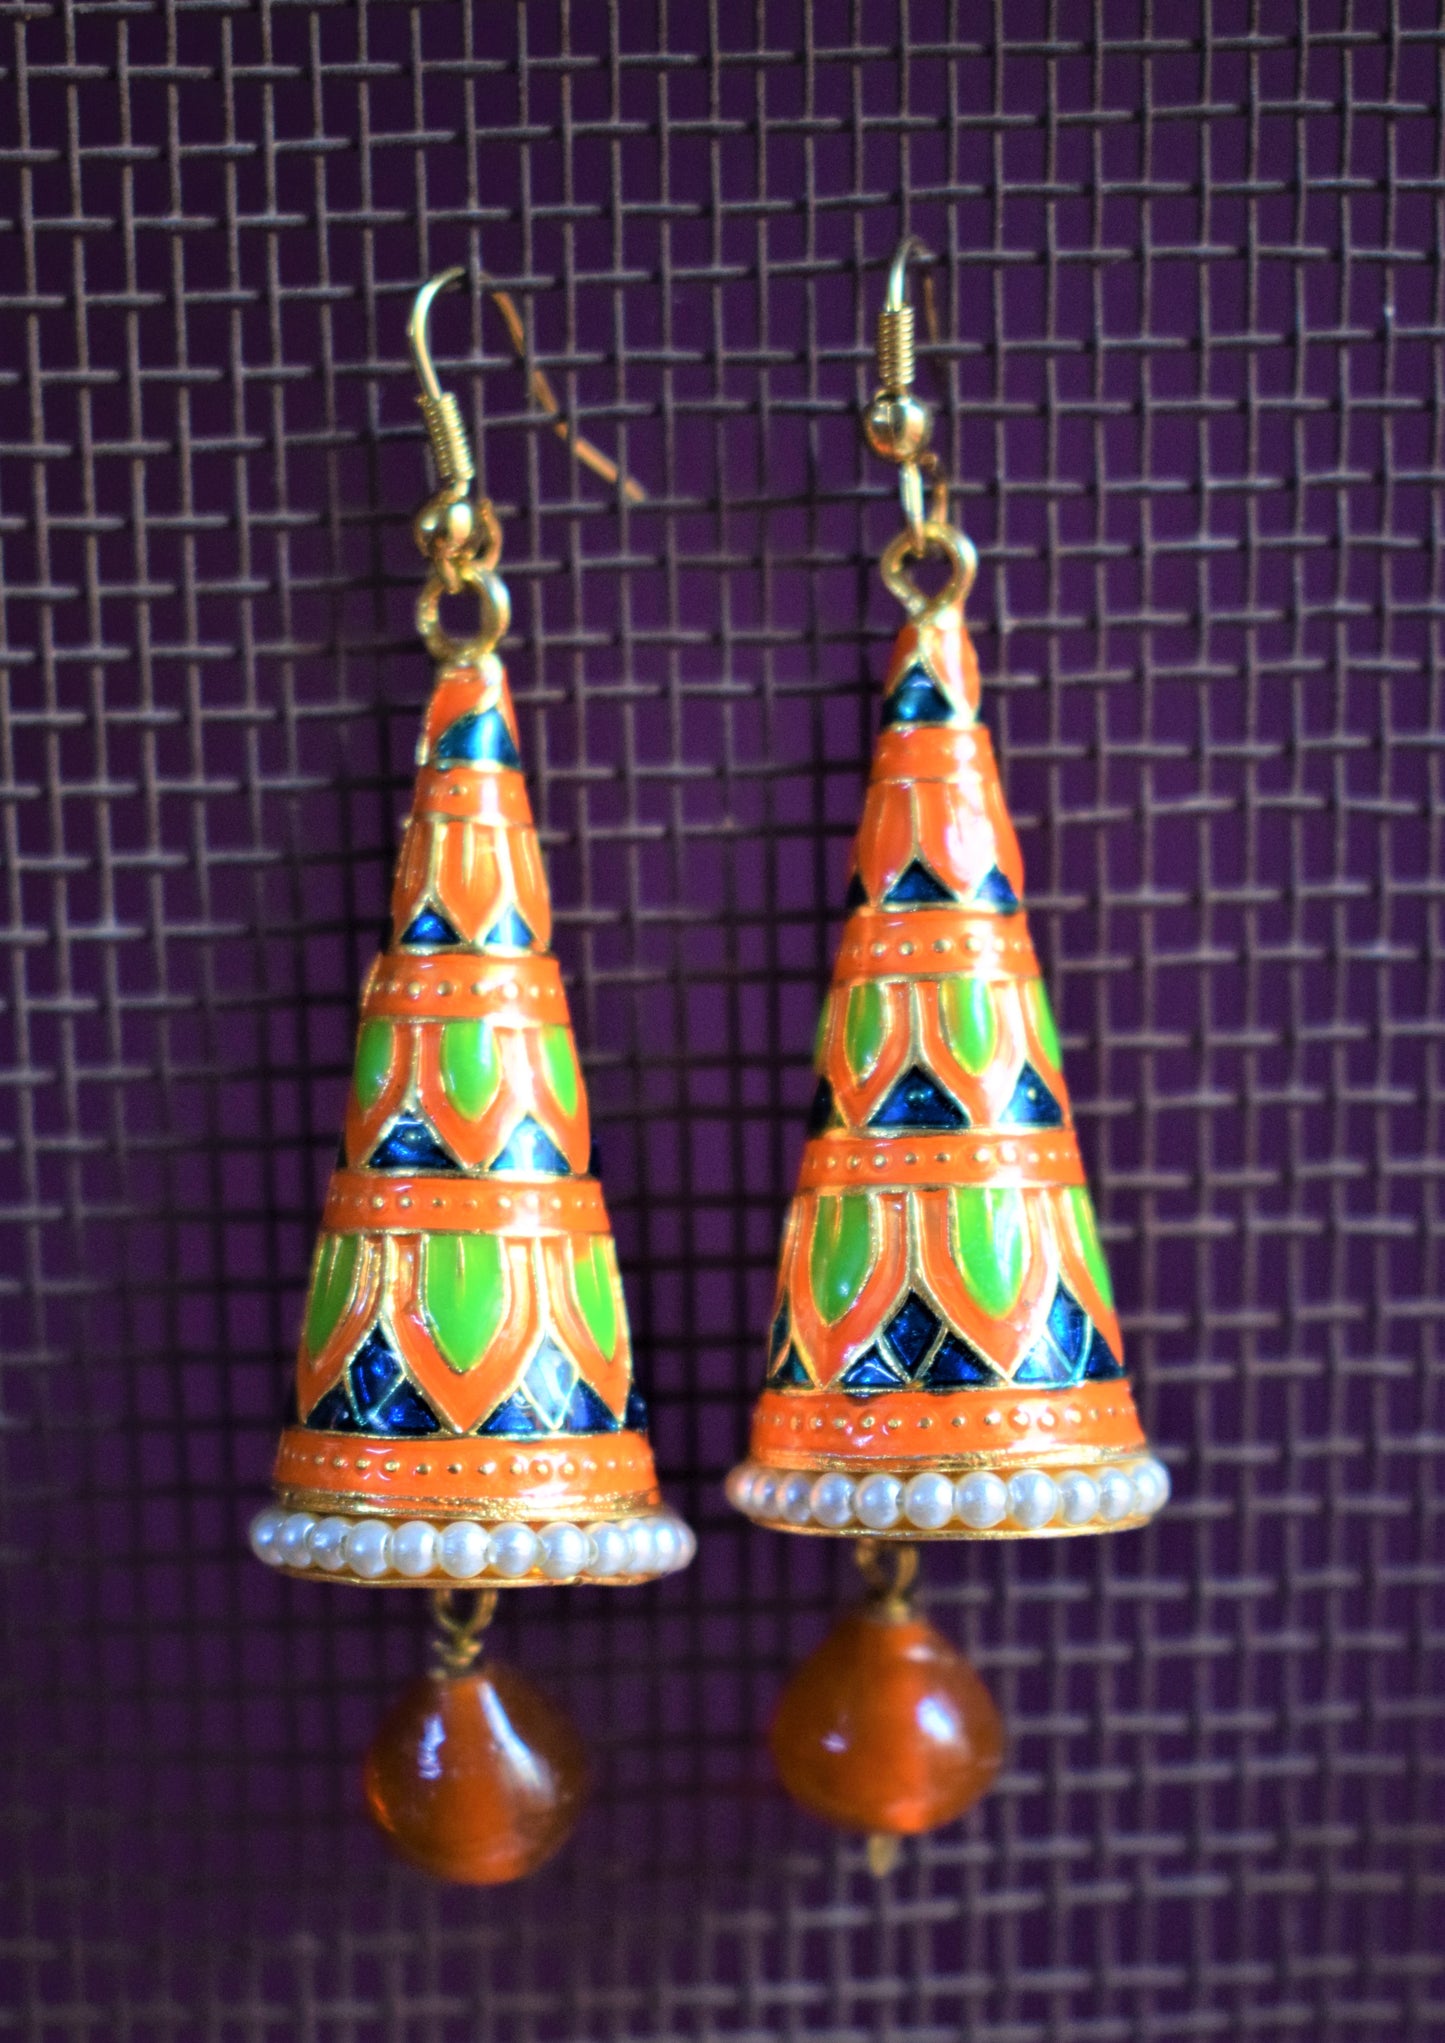 Meenakari Cone Earrings with Pearls - GlitterGleam